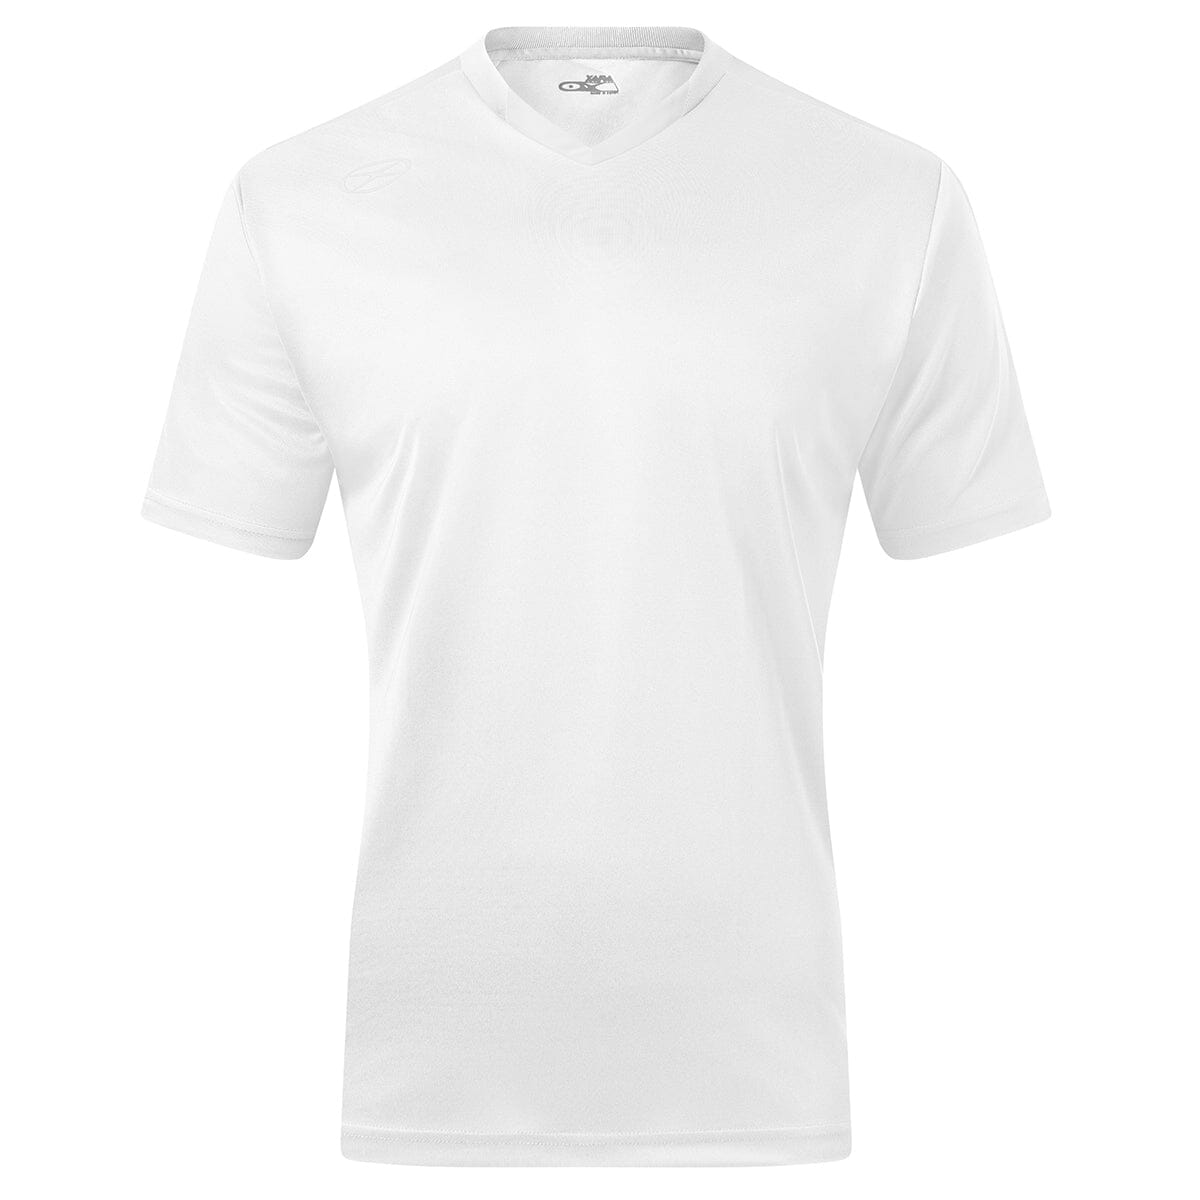 Britannia Jersey - Away Colors - Male Shirt Xara Soccer White/White Small 